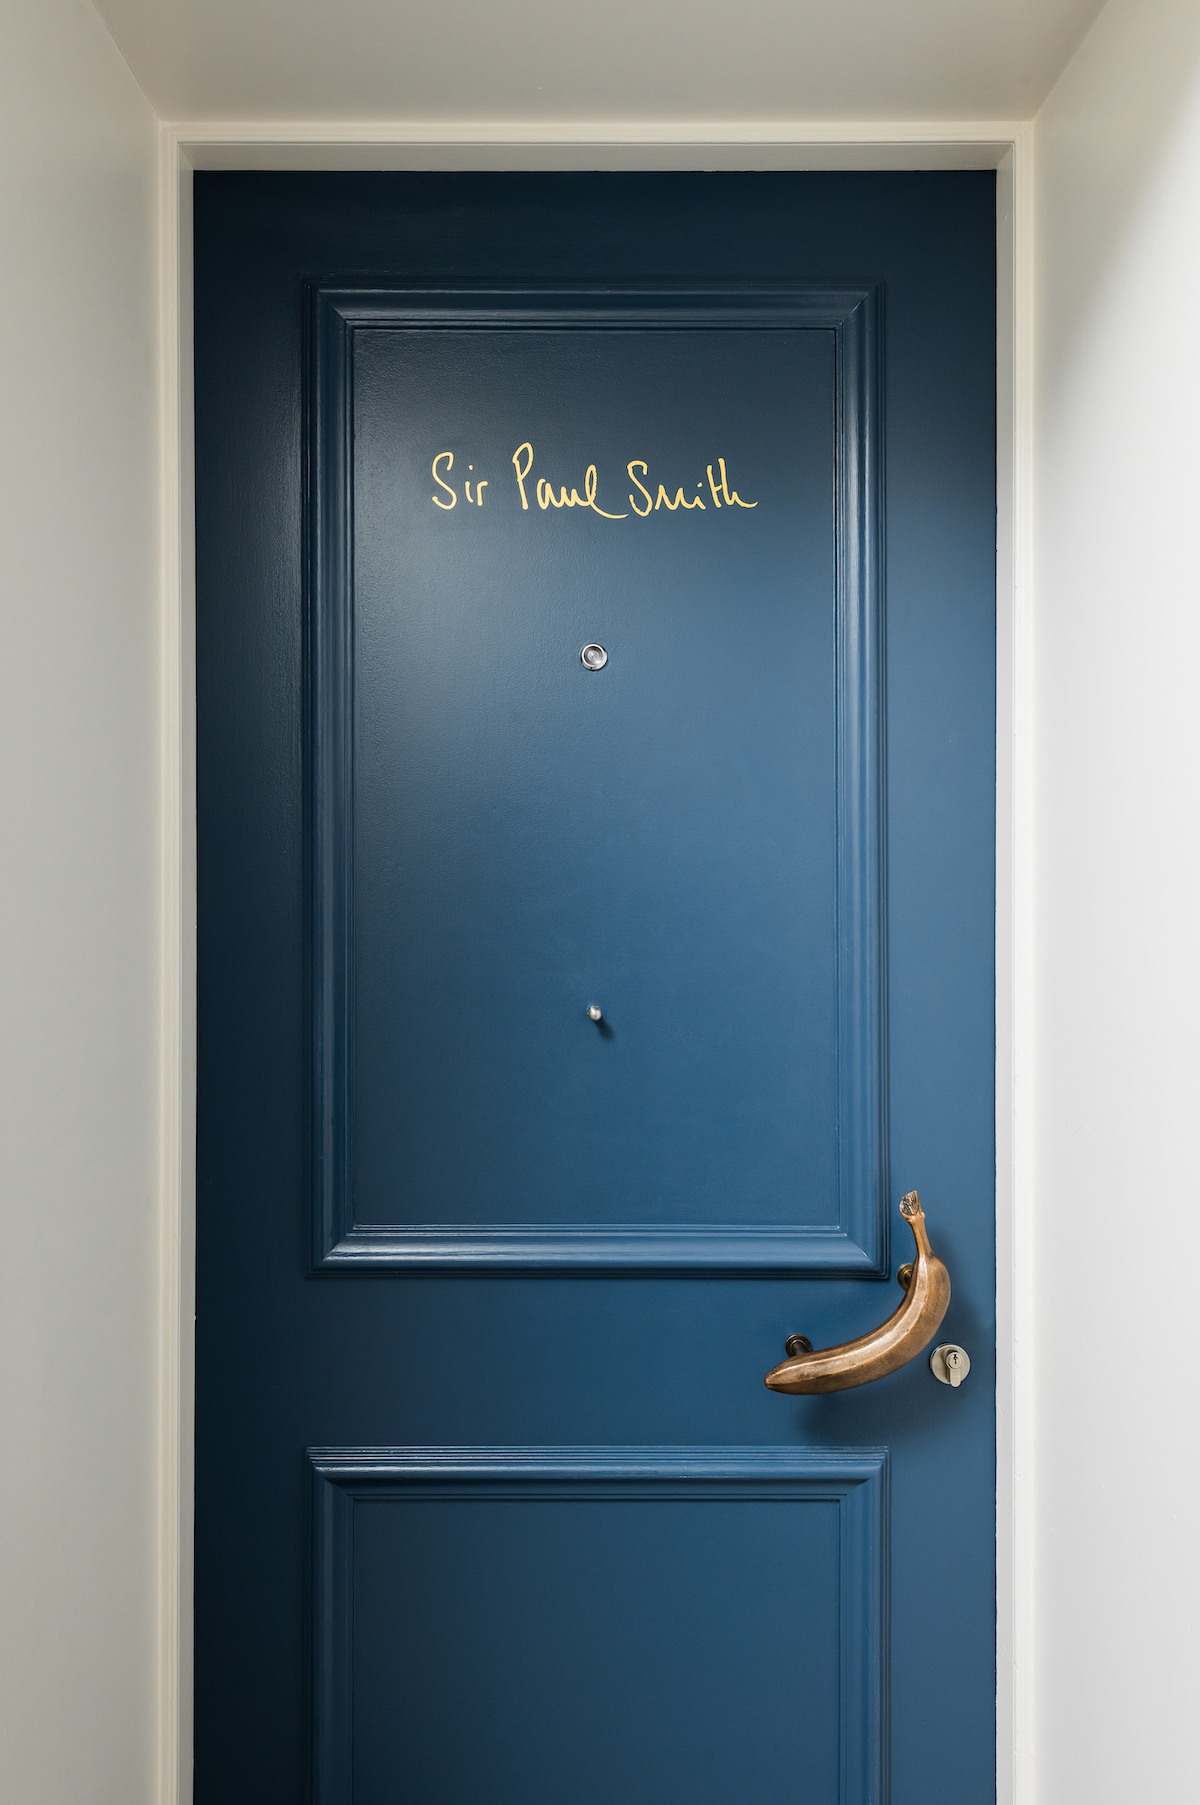 Paul Smith door and banana handle